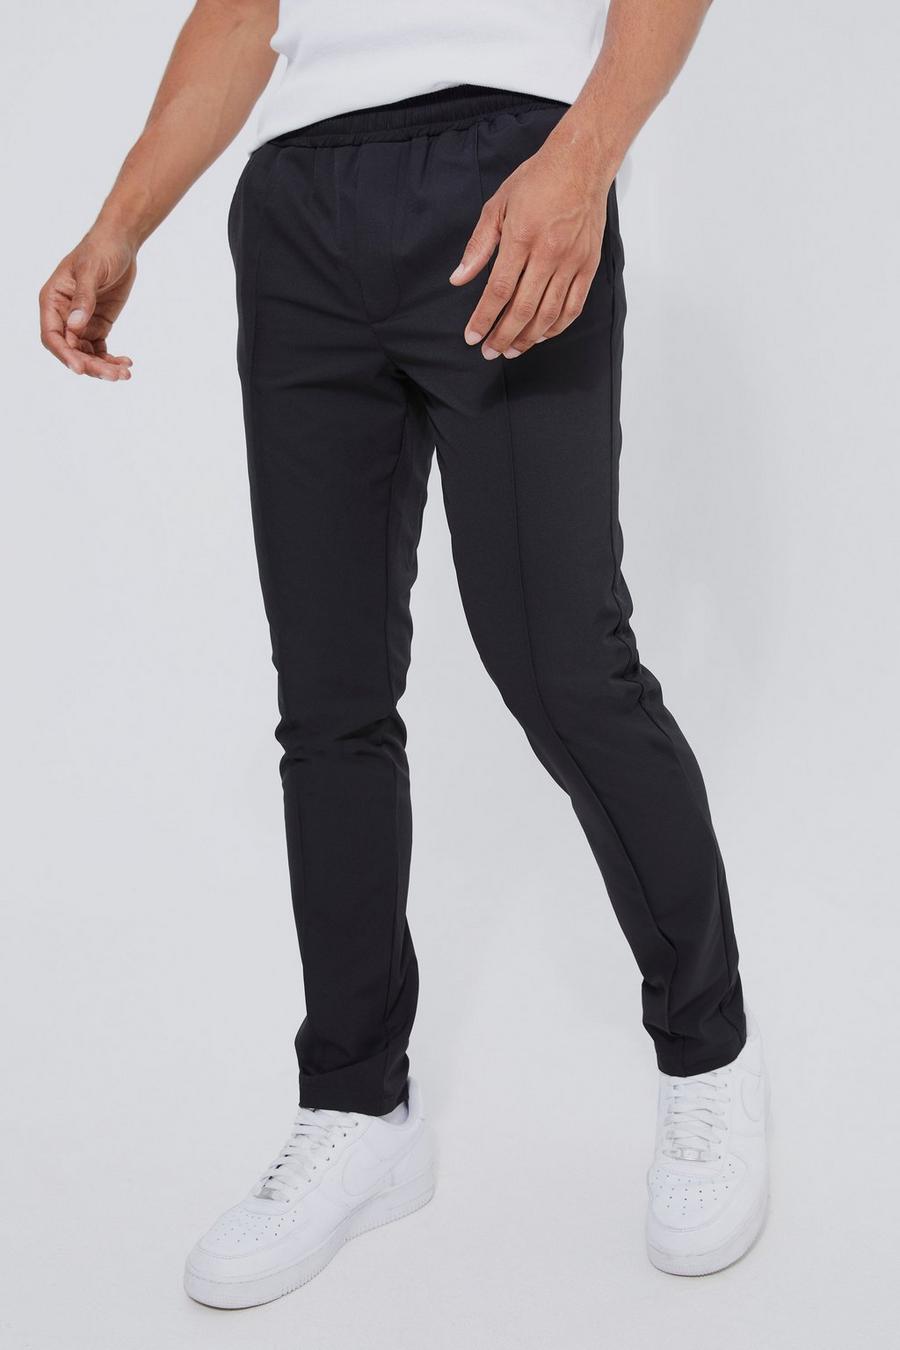 Black Elasticated Skinny Pintuck 4 Way Stretch Trousers